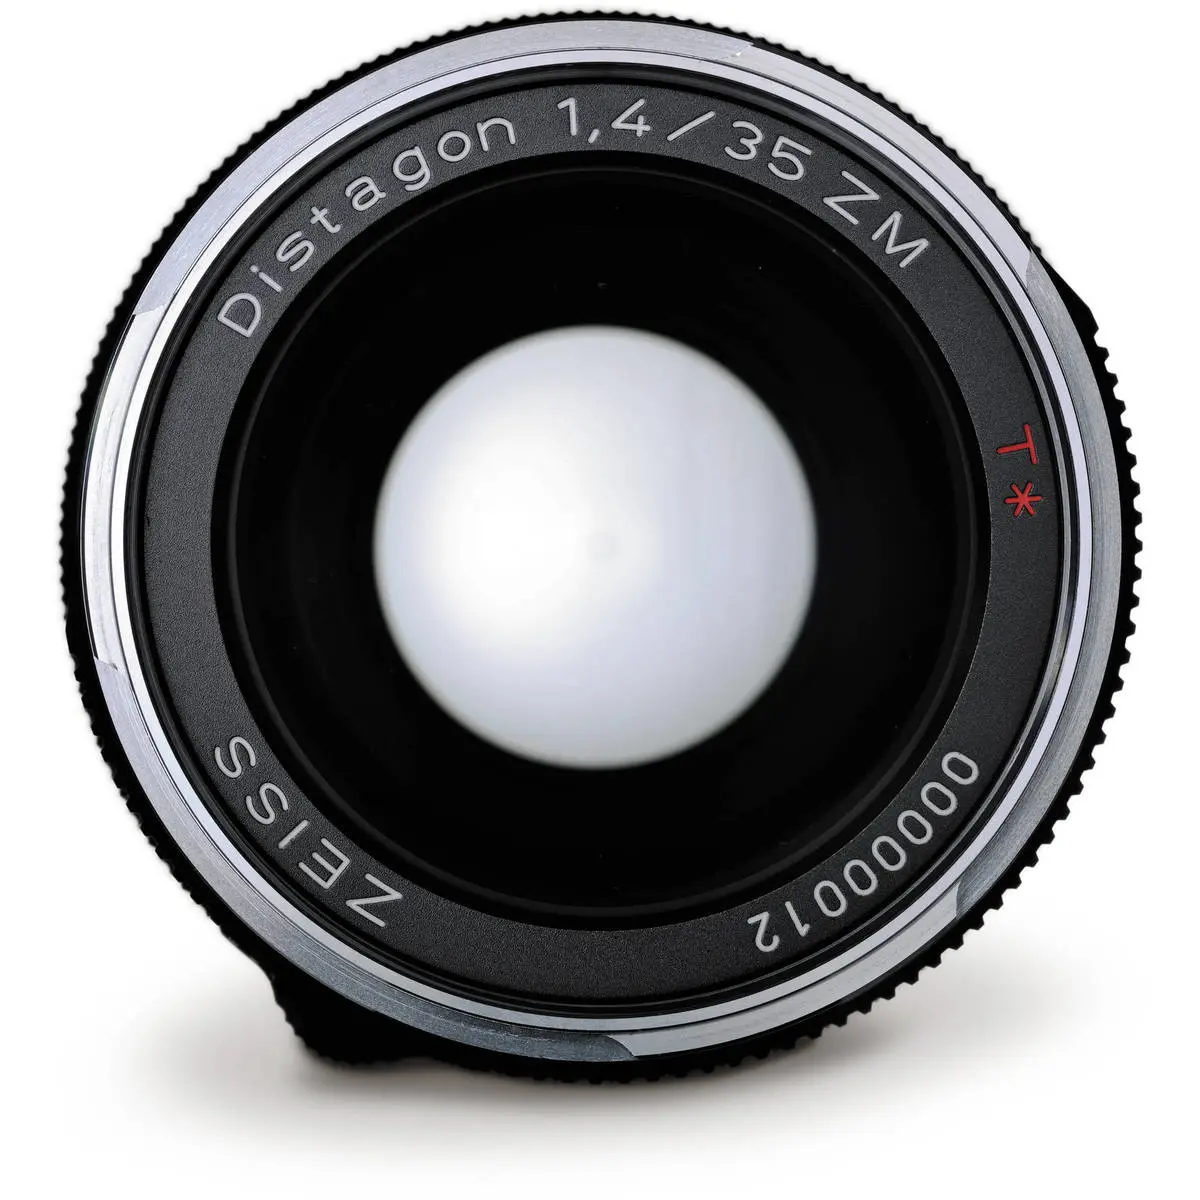 4. Carl Zeiss Distagon T* 35mm f/1.4 ZM Lens (Black) Lens